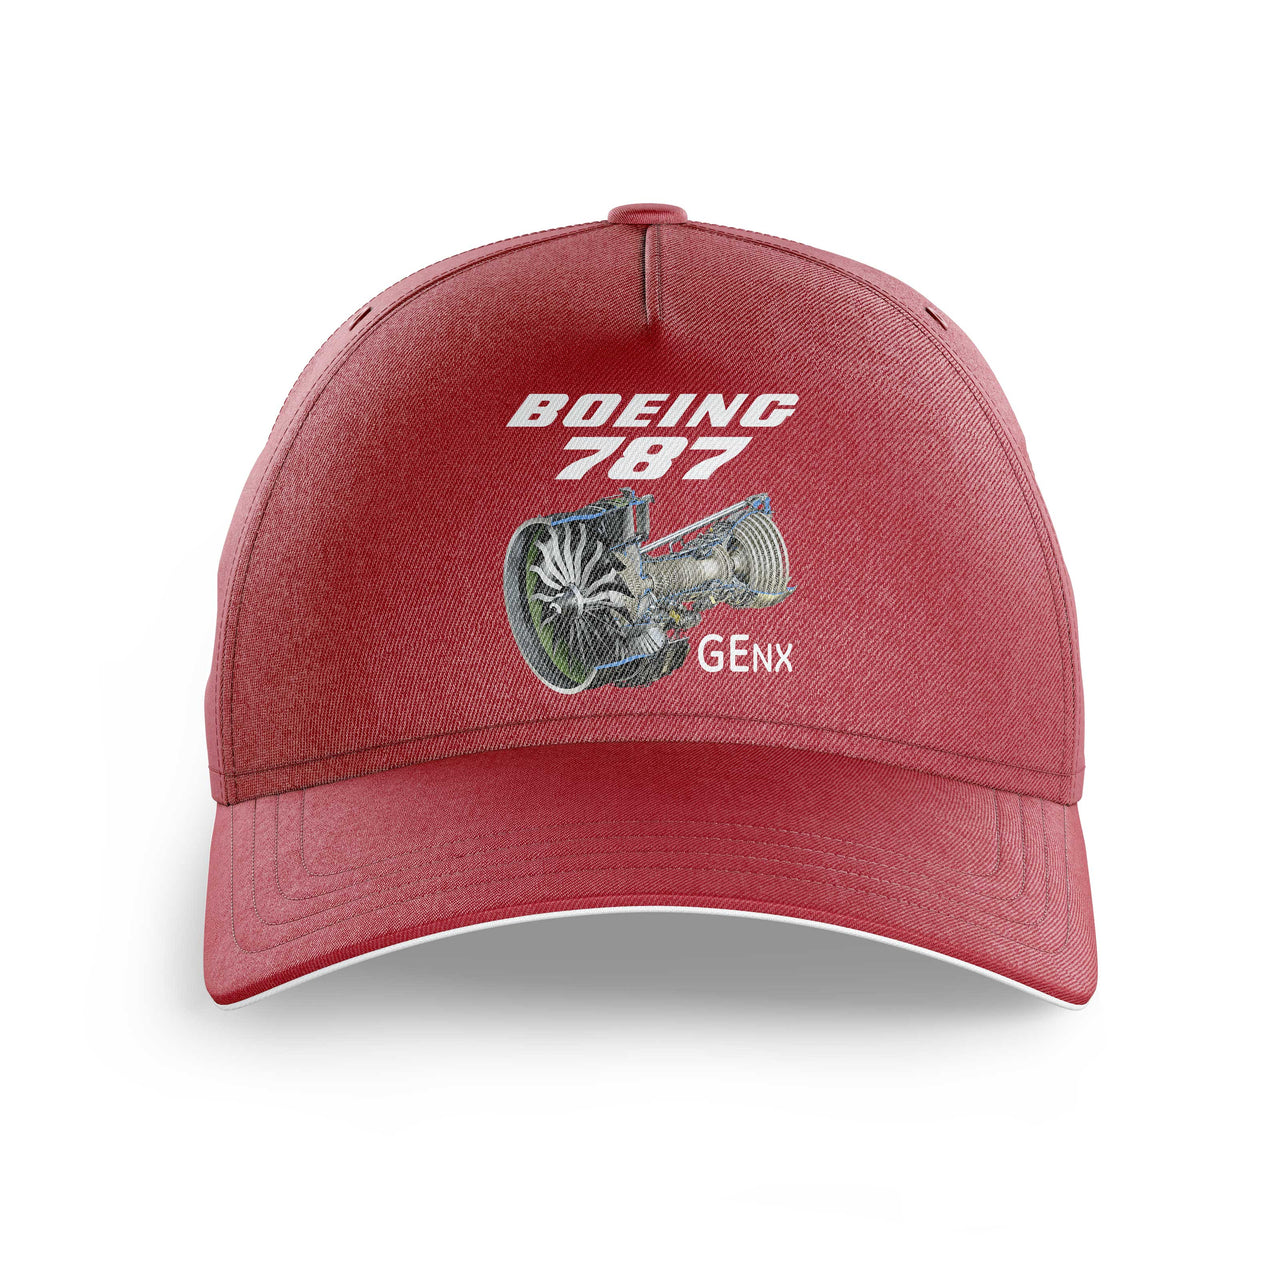 Boeing 787 & GENX Engine Printed Hats